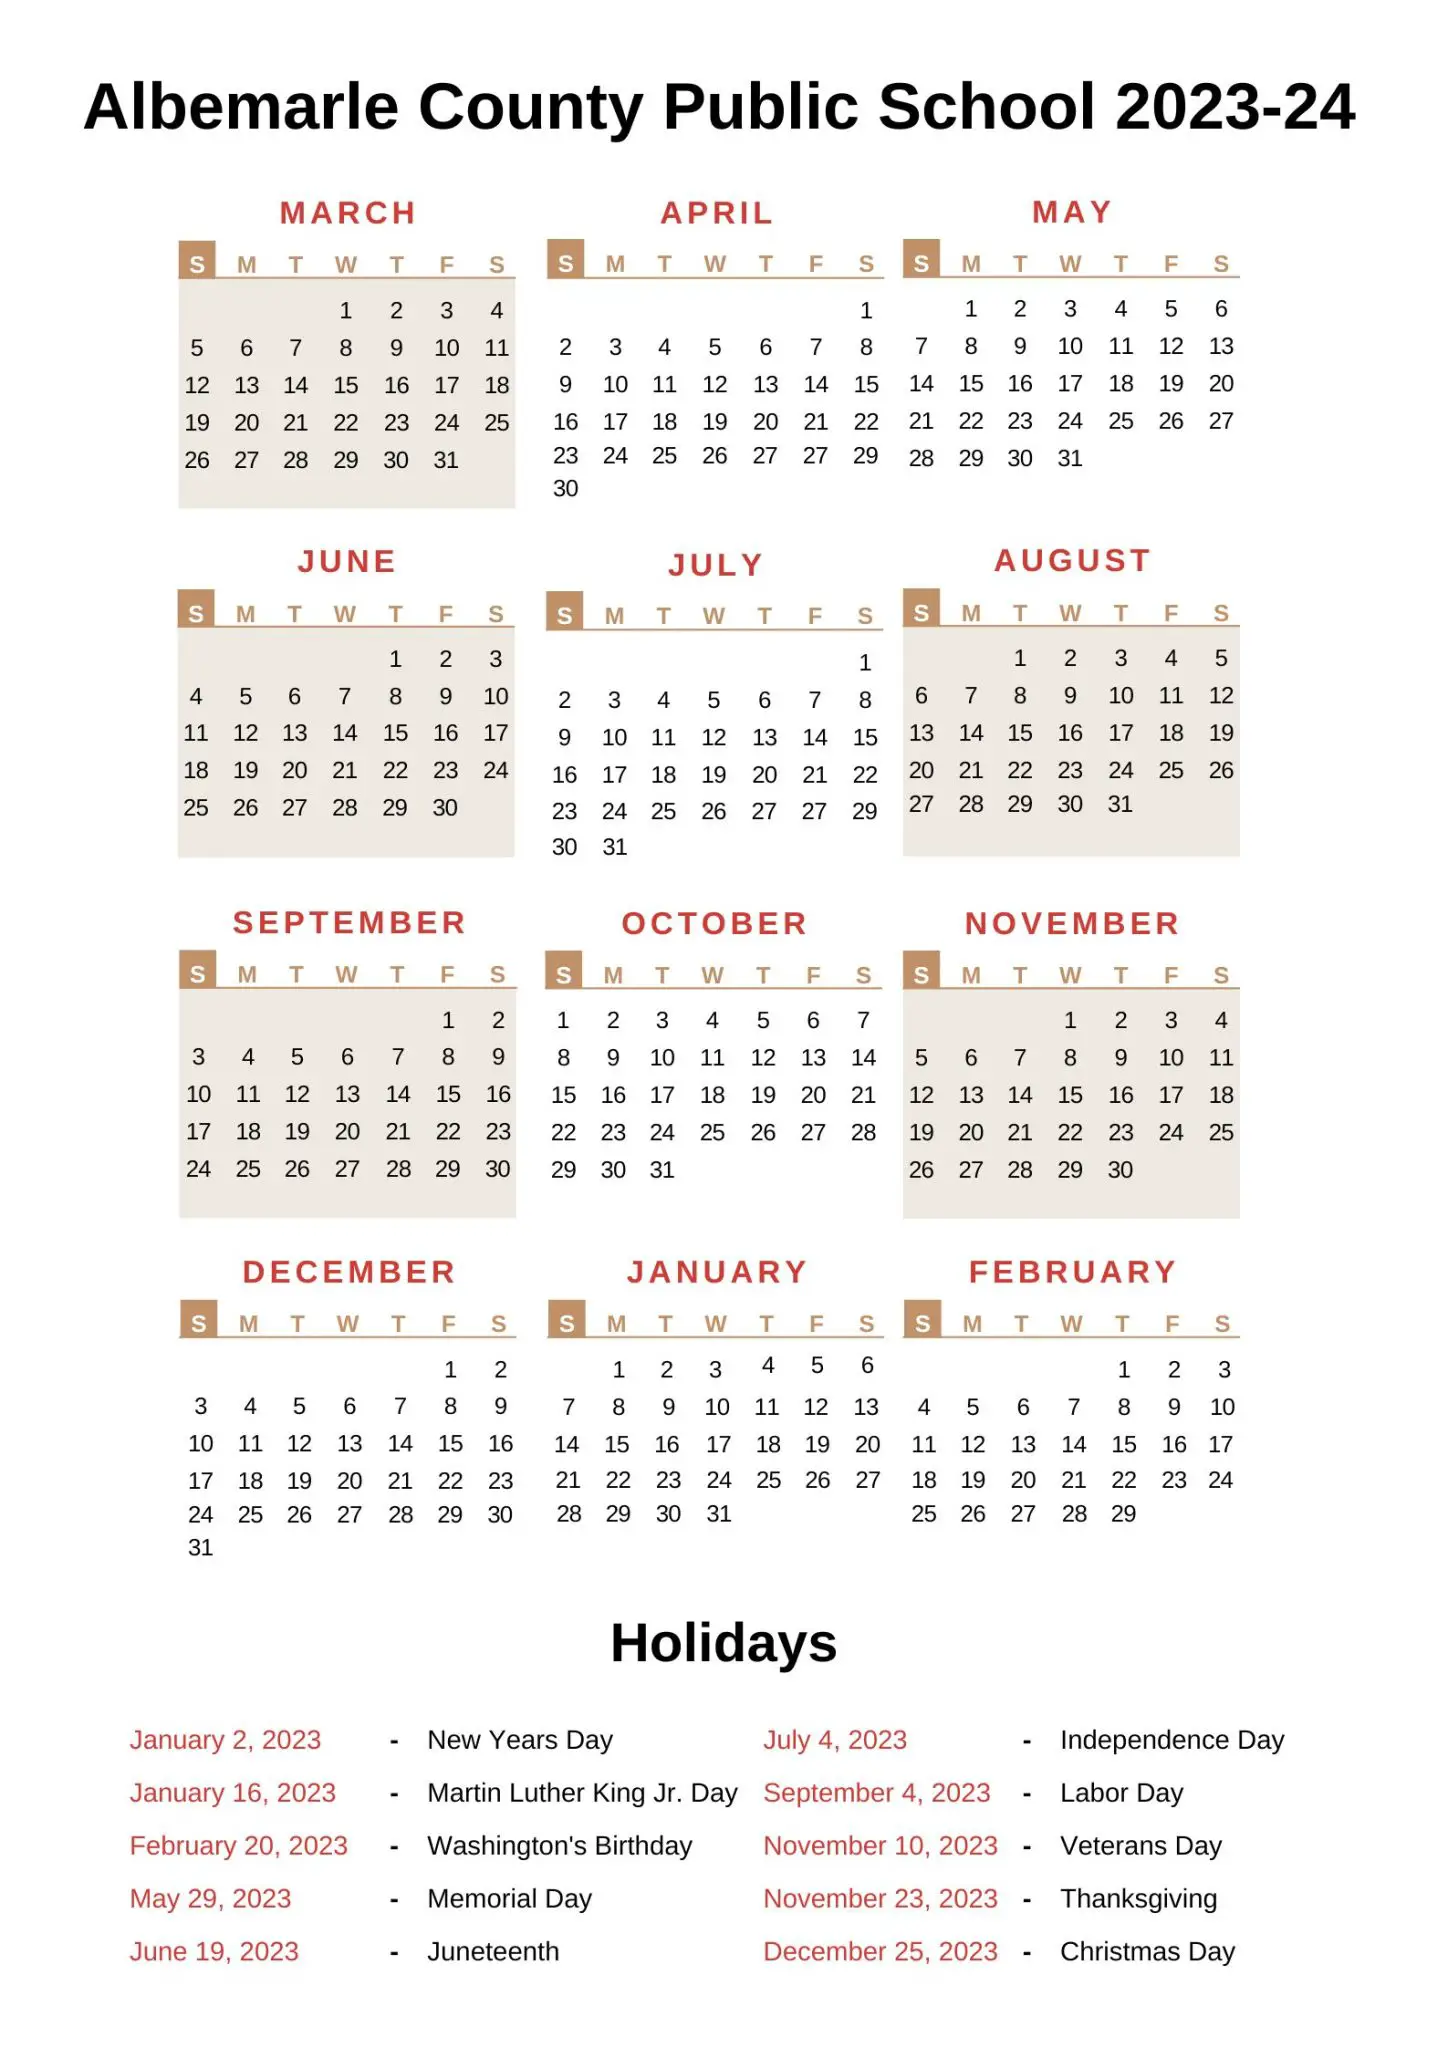 albemarle-county-public-schools-calendar-2023-24-with-holidays